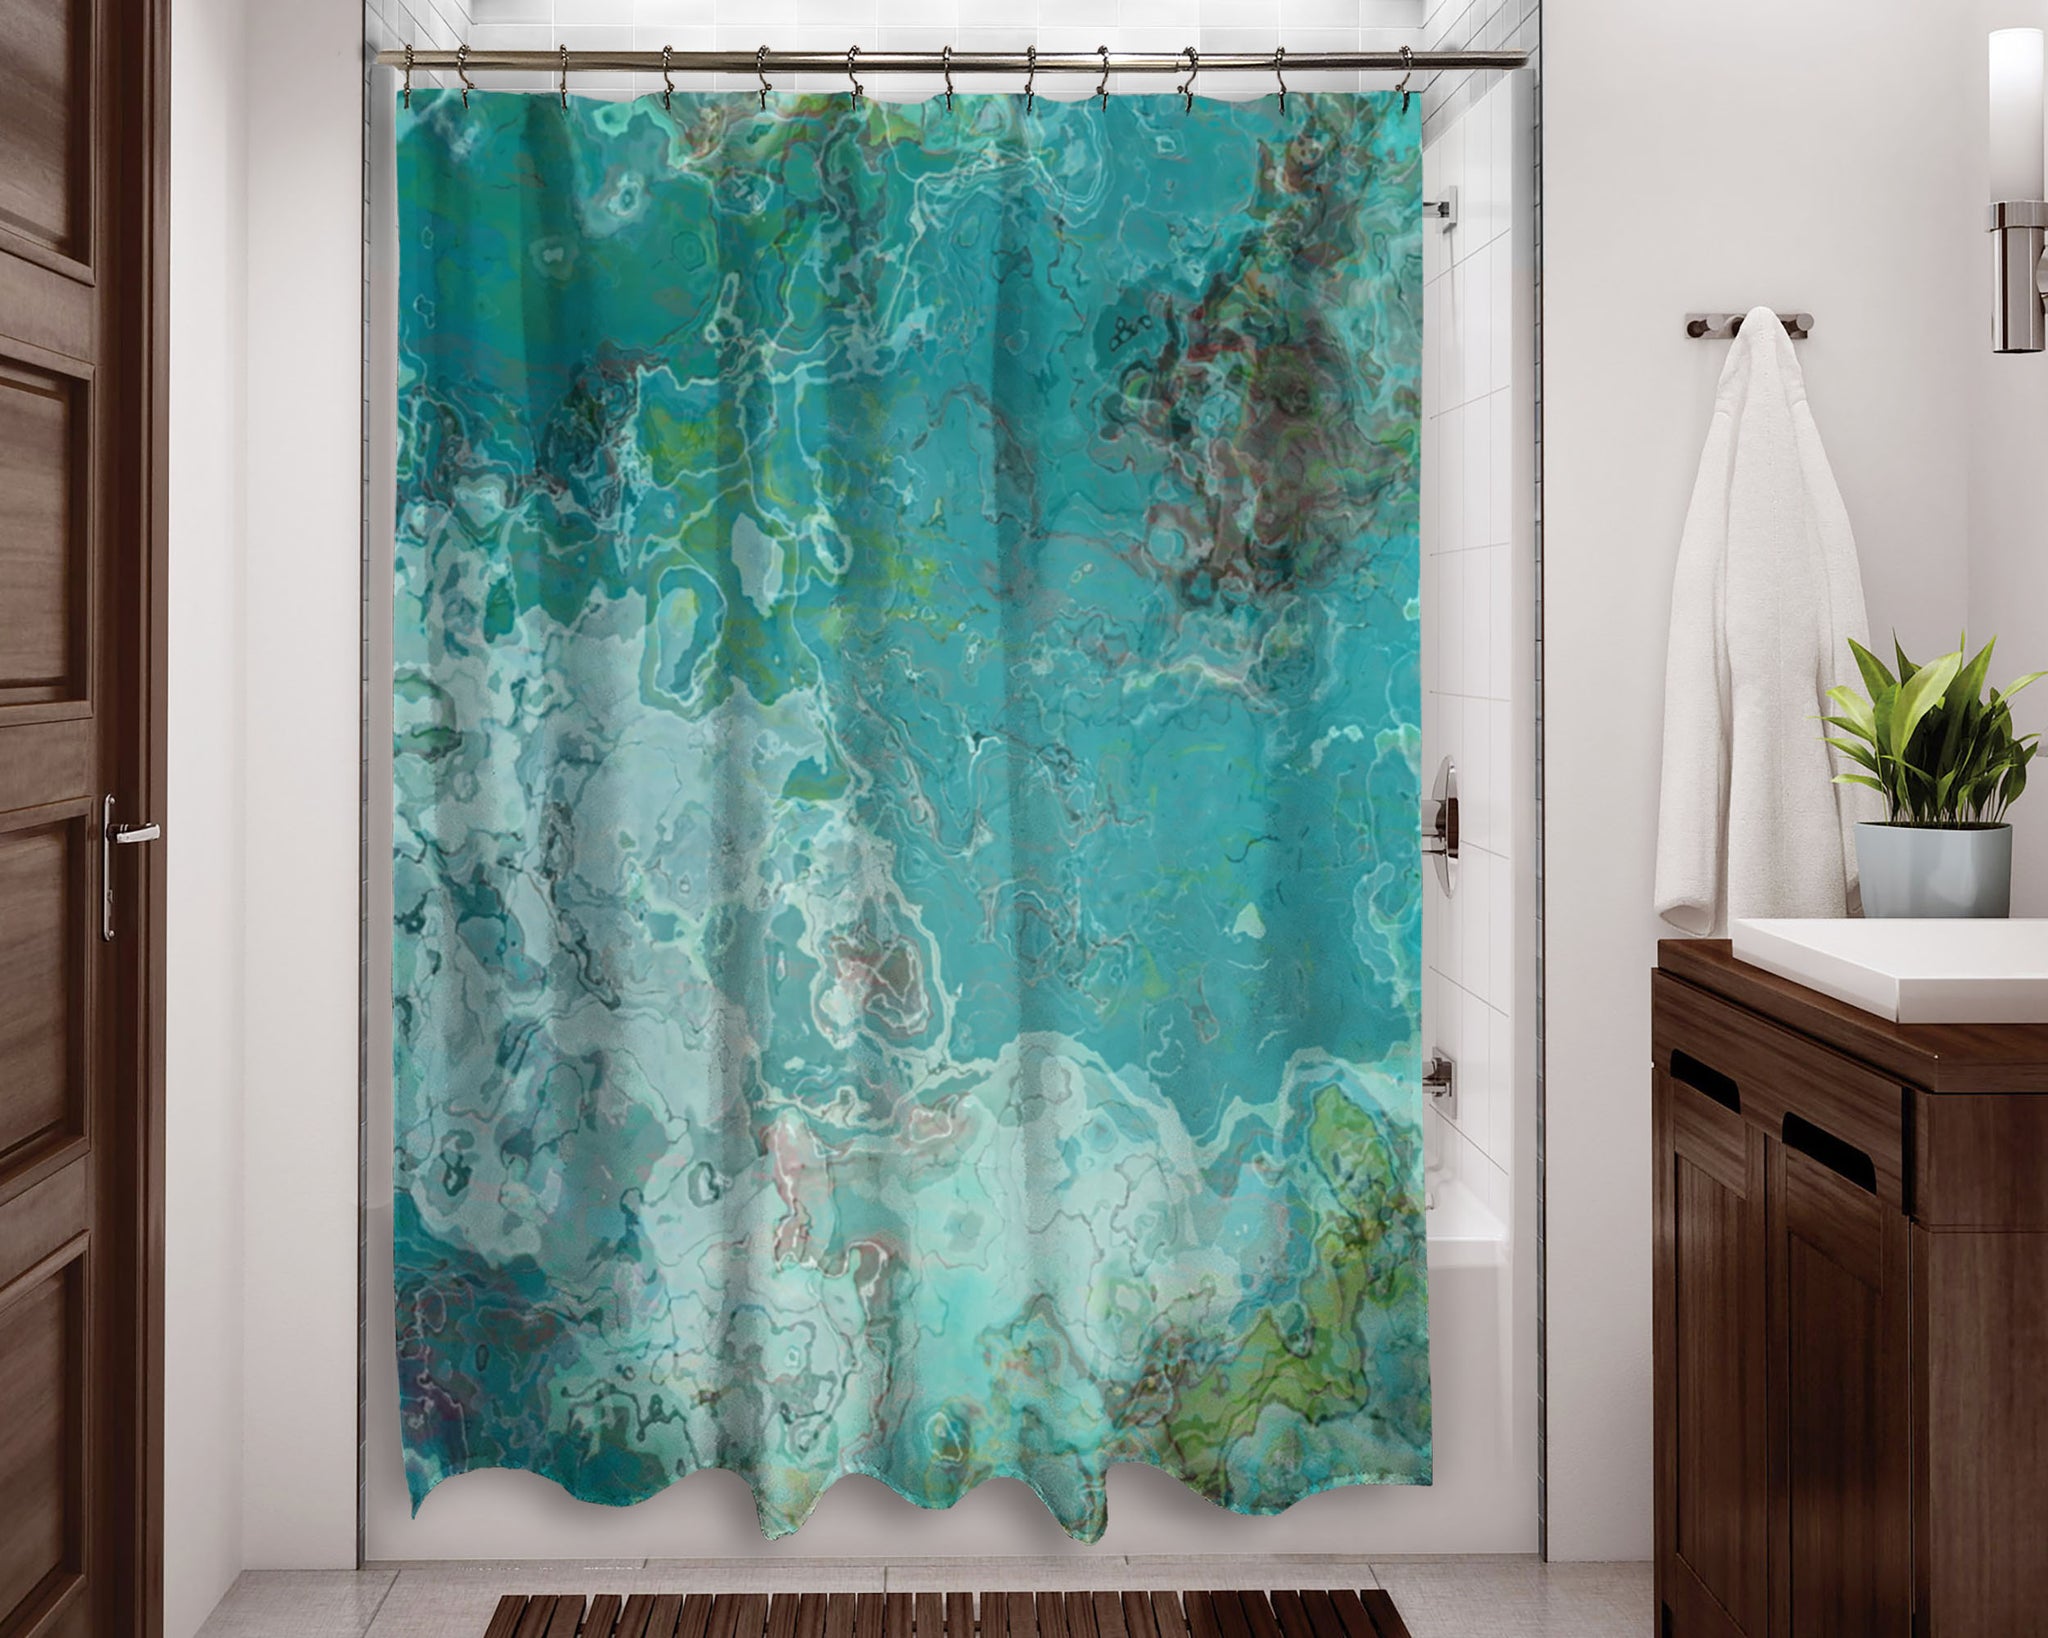 Abstract Shower Curtain Contemporary Bathroom Decor Soft Concept Art Home